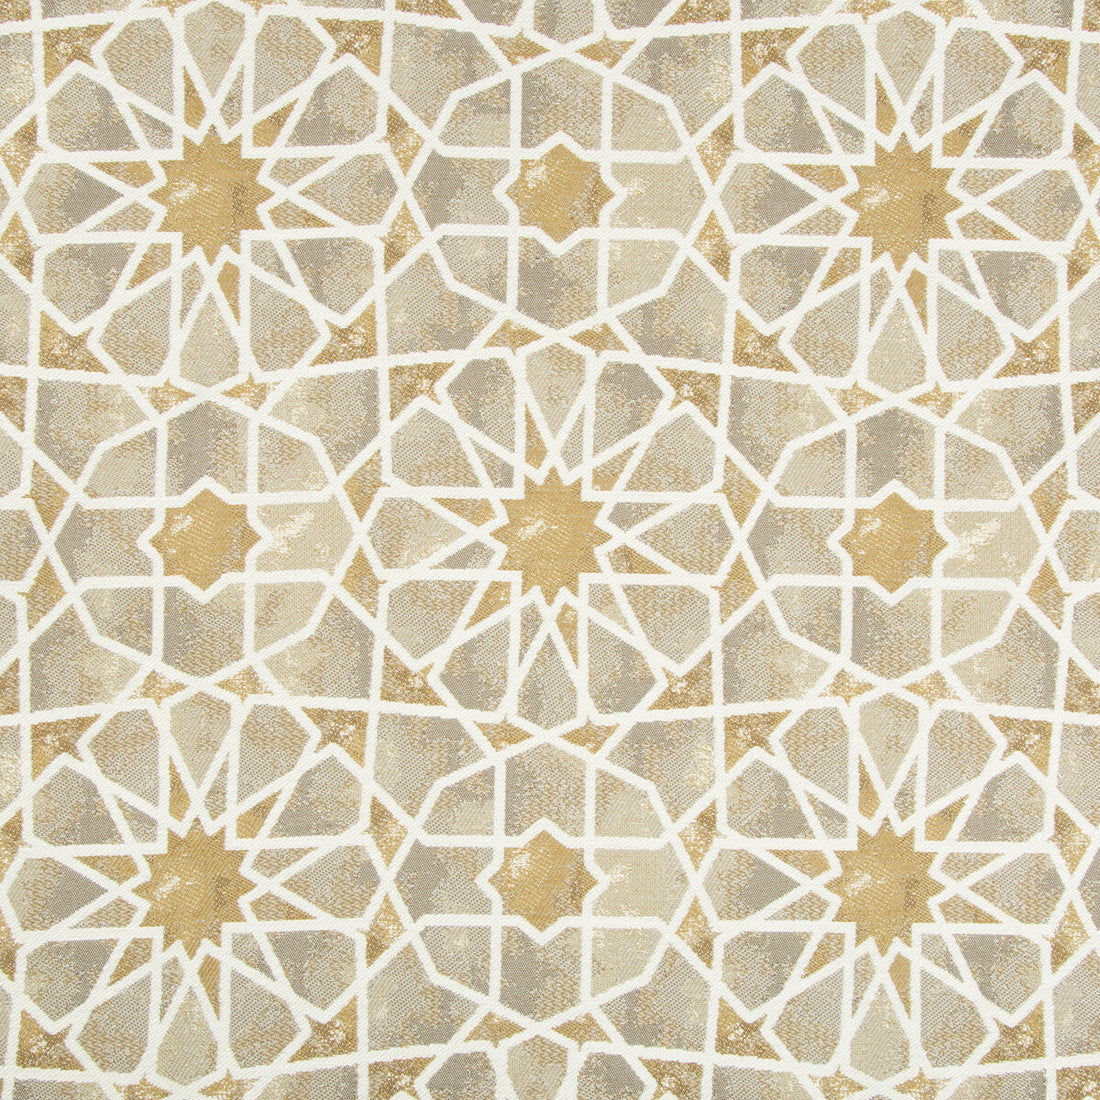 Kravet Design fabric in 34722-16 color - pattern 34722.16.0 - by Kravet Design in the Gis collection